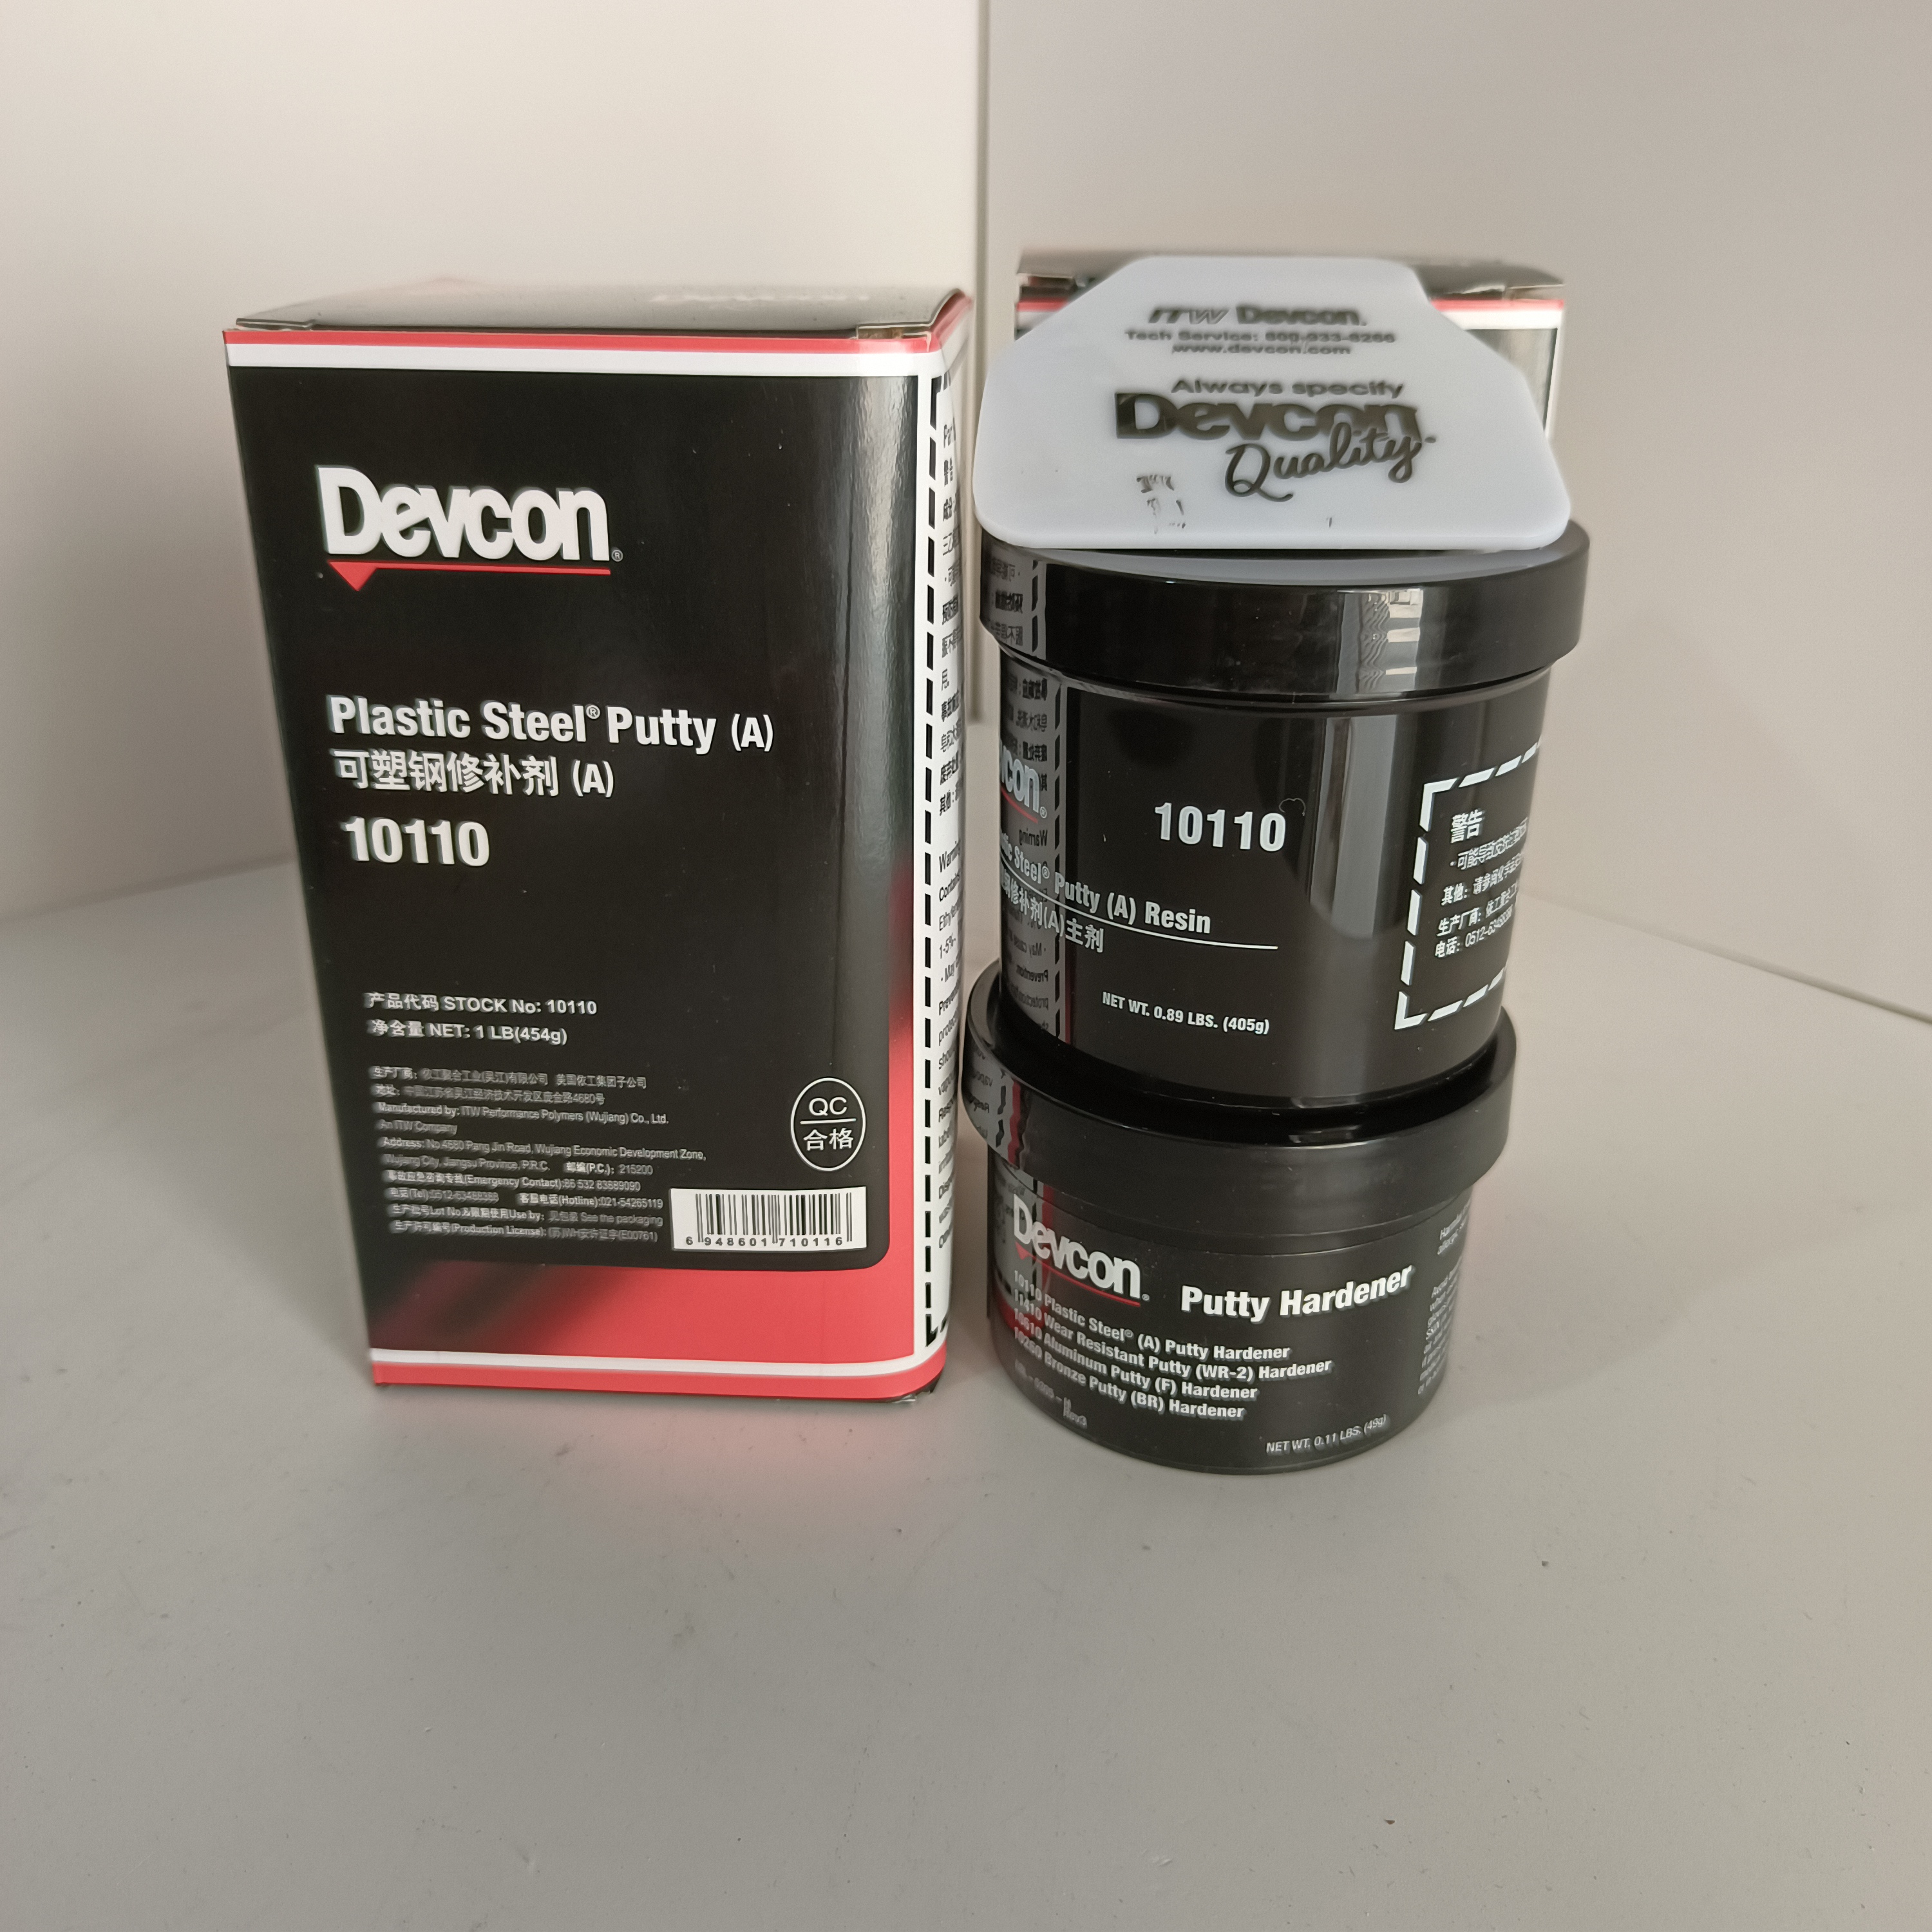 DEVCON PLASTIC STEEL PUTTY (A)